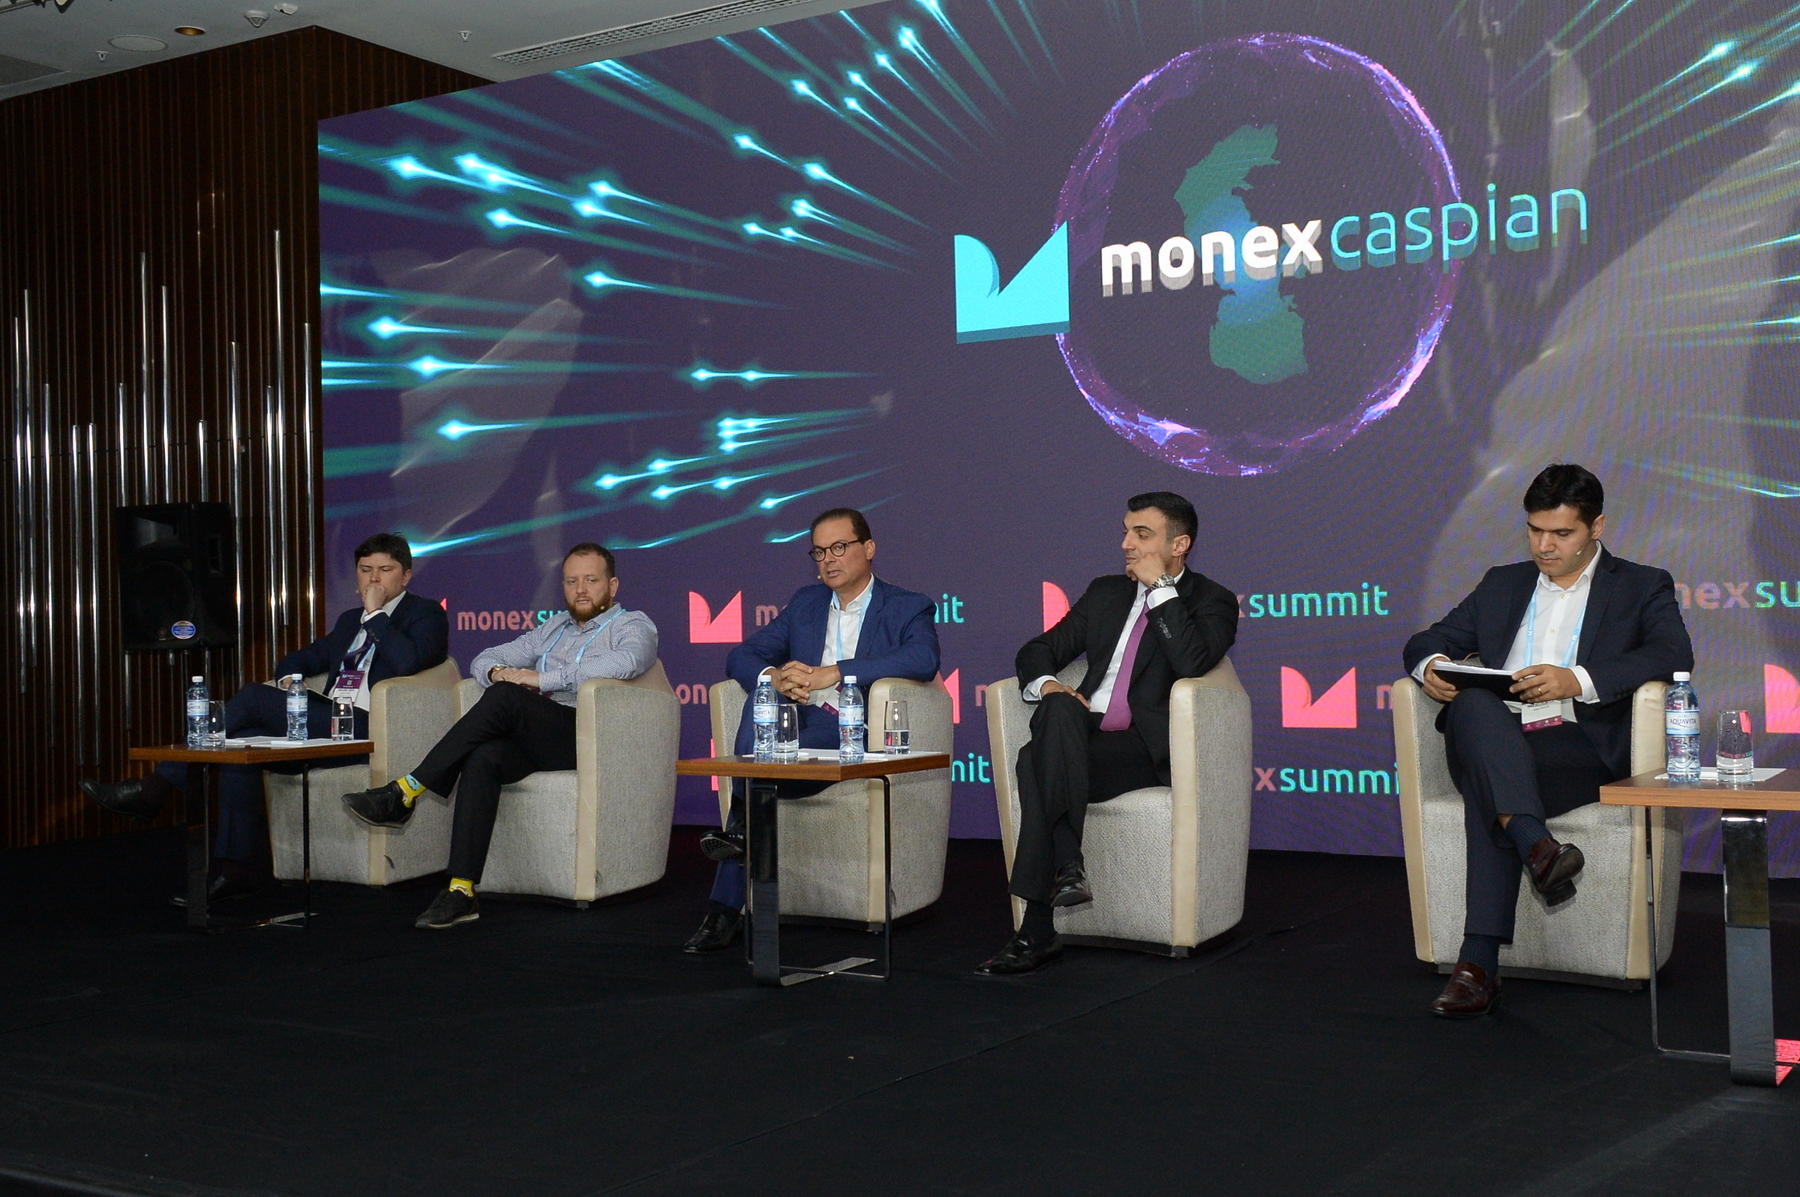 Monex Caspian international summit takes place in Azerbaijan (PHOTO)